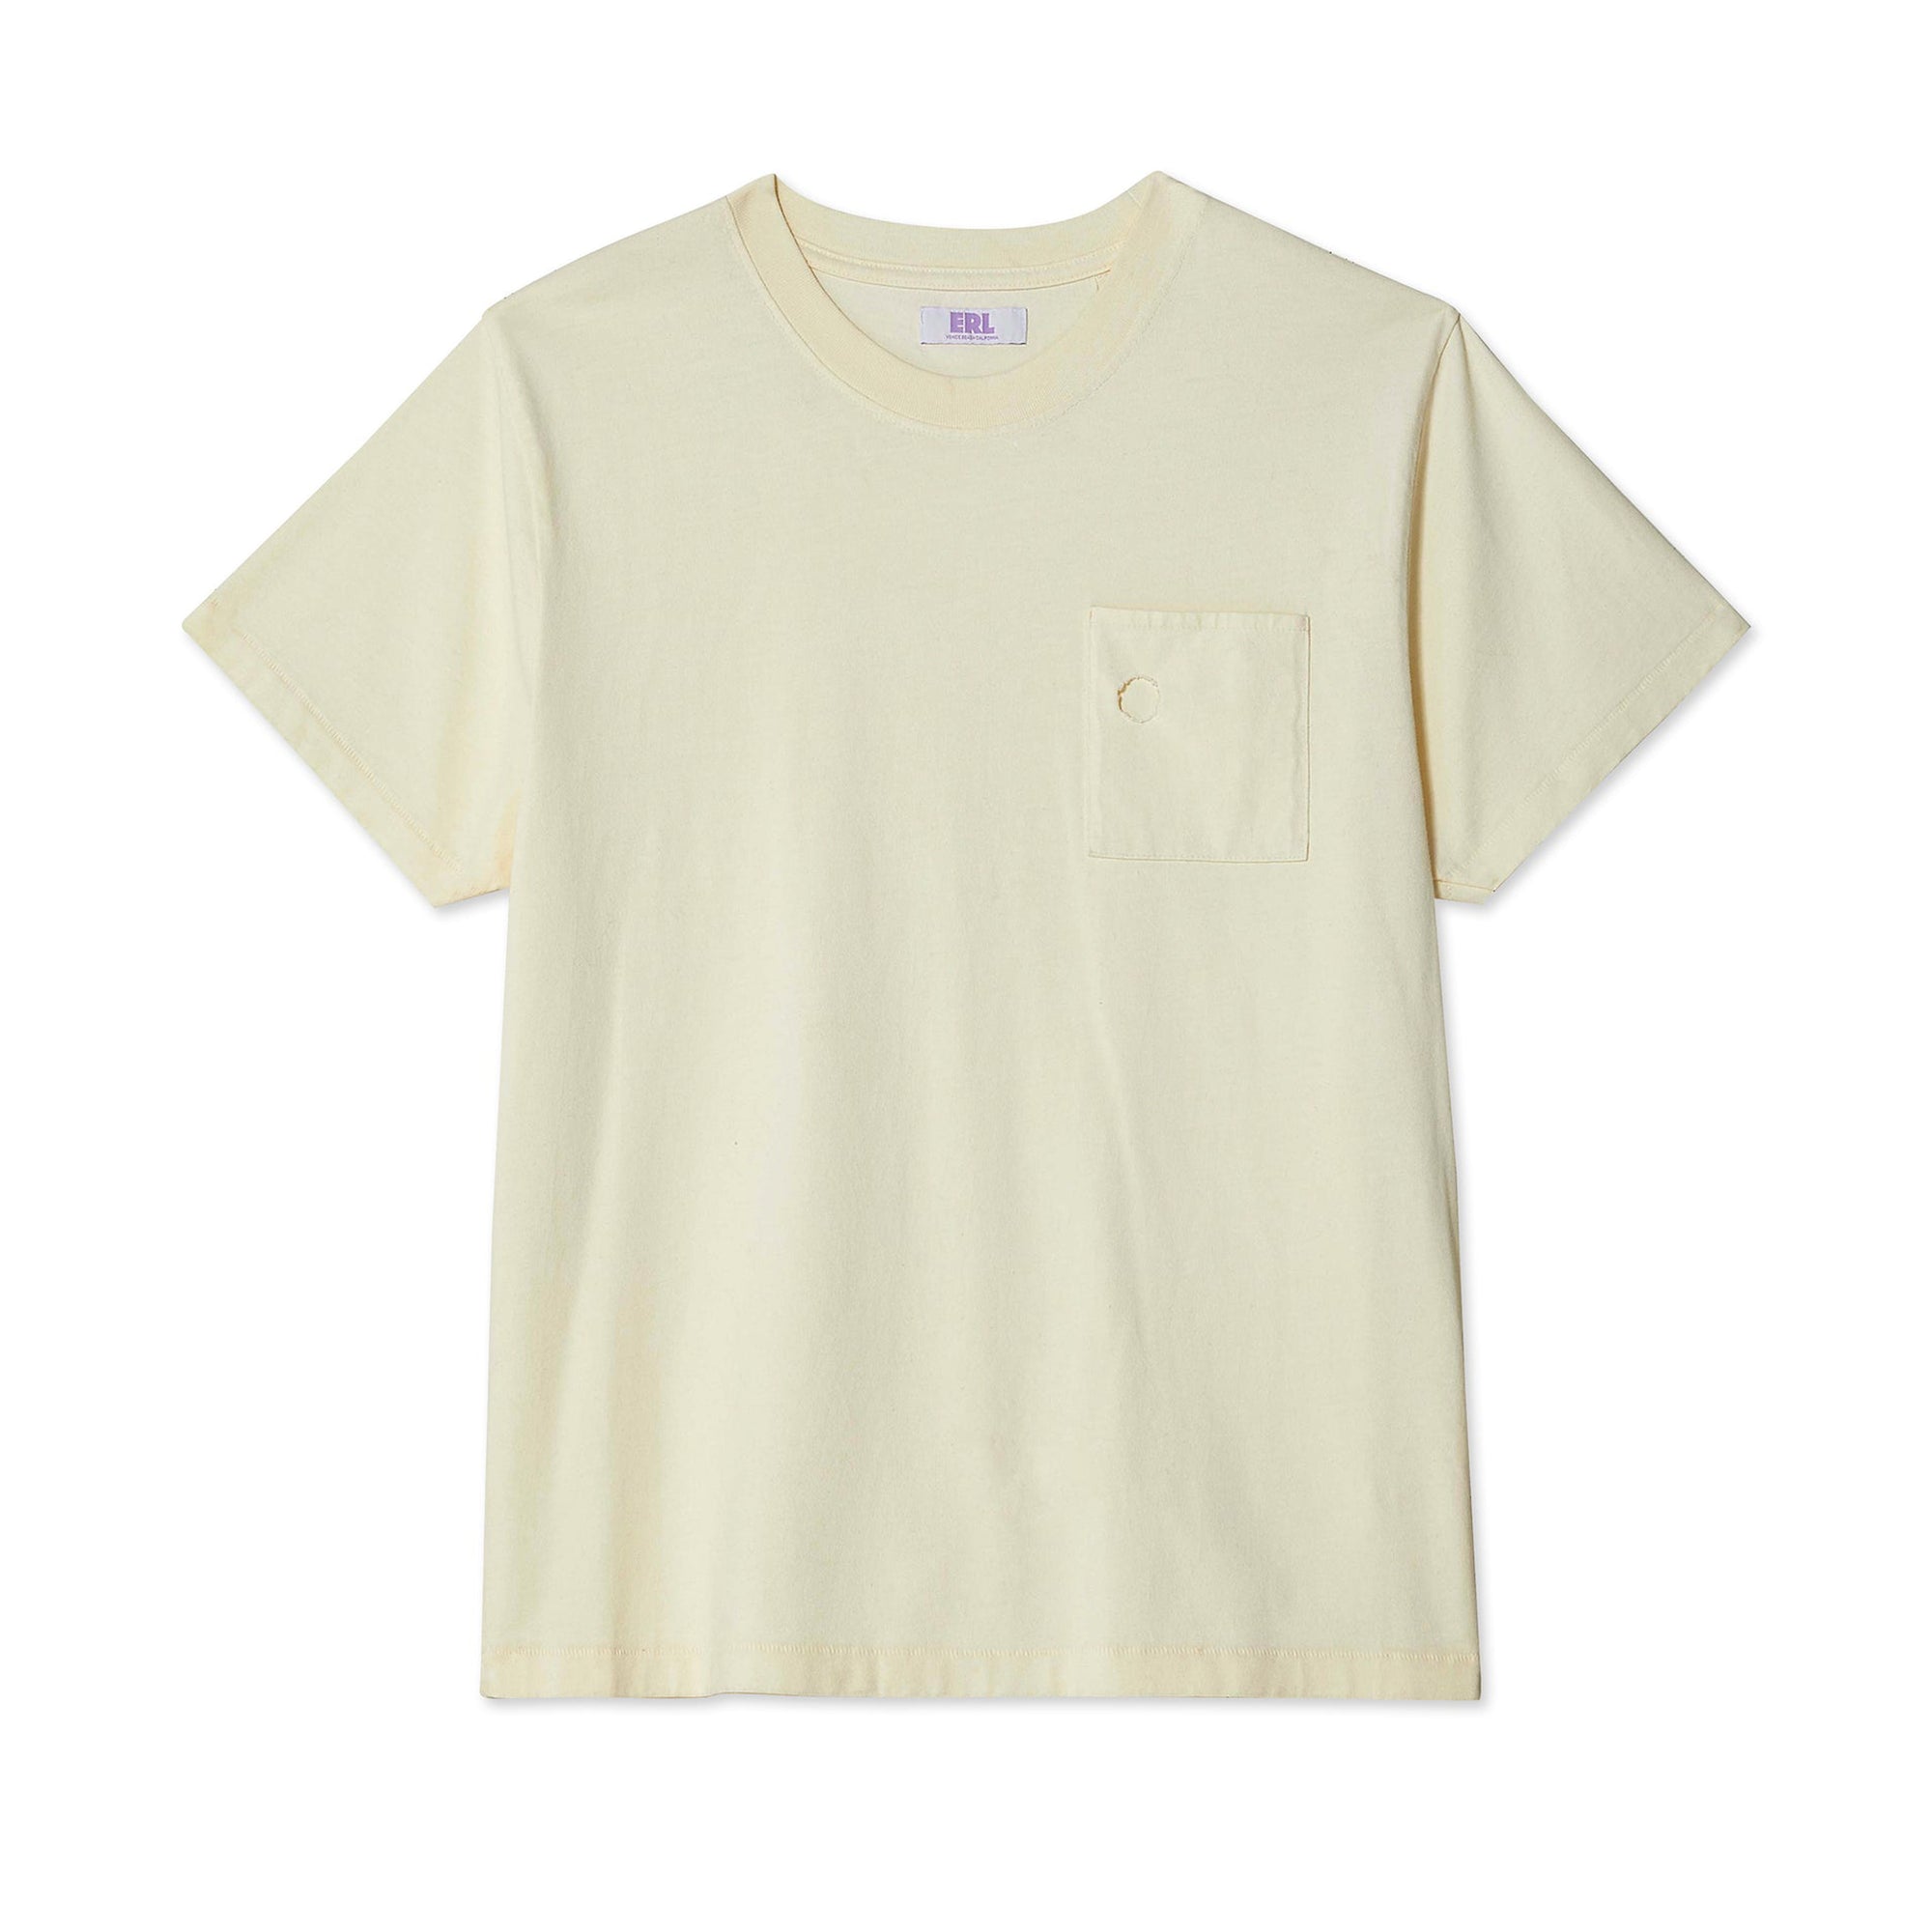 ERL - Men’s Pocket T-Shirt - (White) view 1